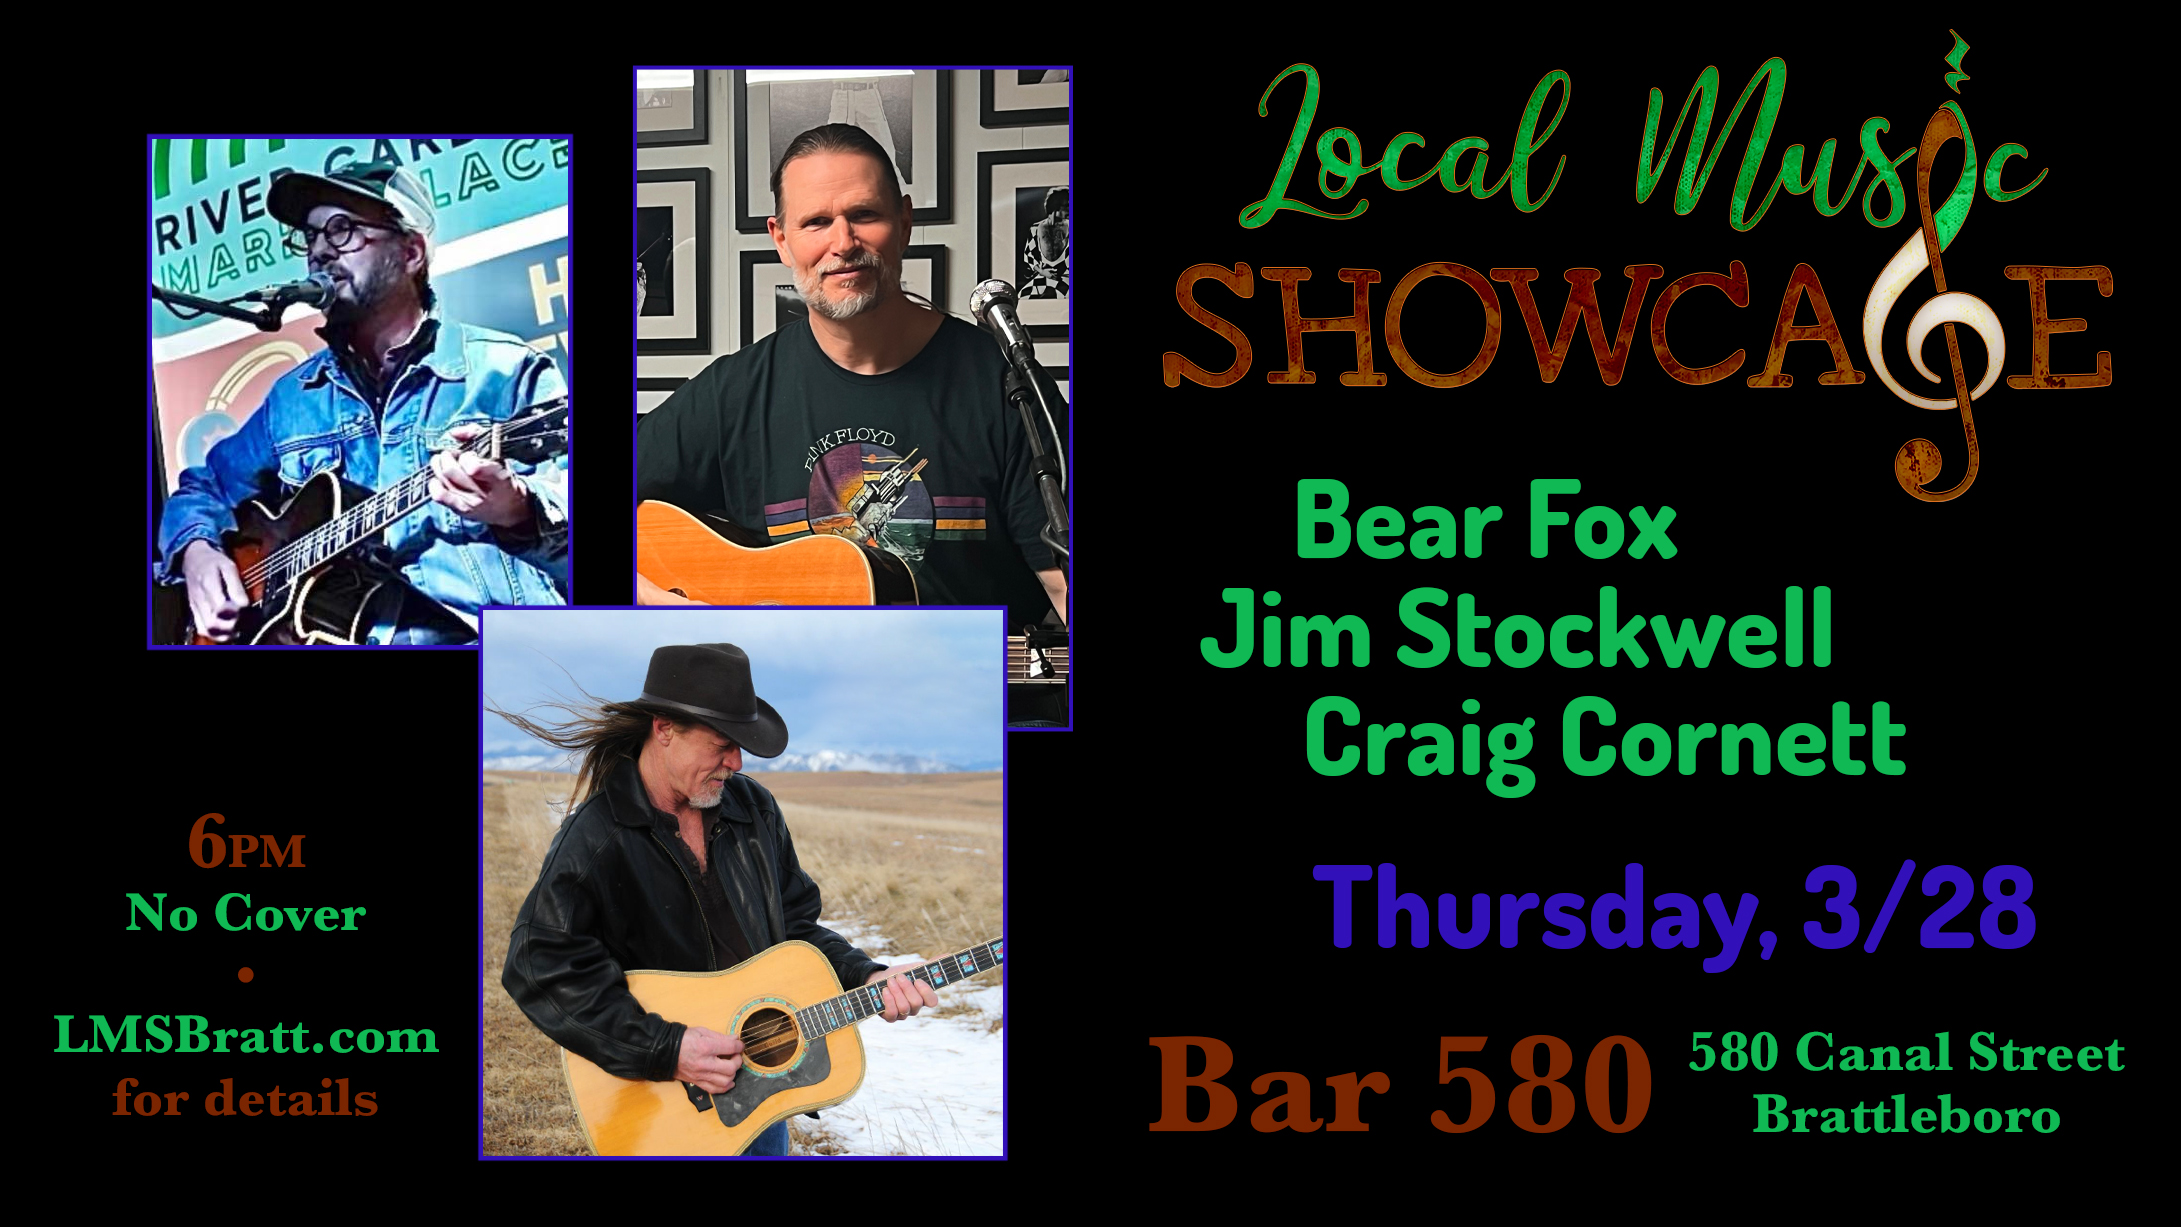 Local Music Showcase, Live Music, Brattleboro, Vermont, Bear Fox, Jim Stockwell, Craig Cornett, Donald McCullough